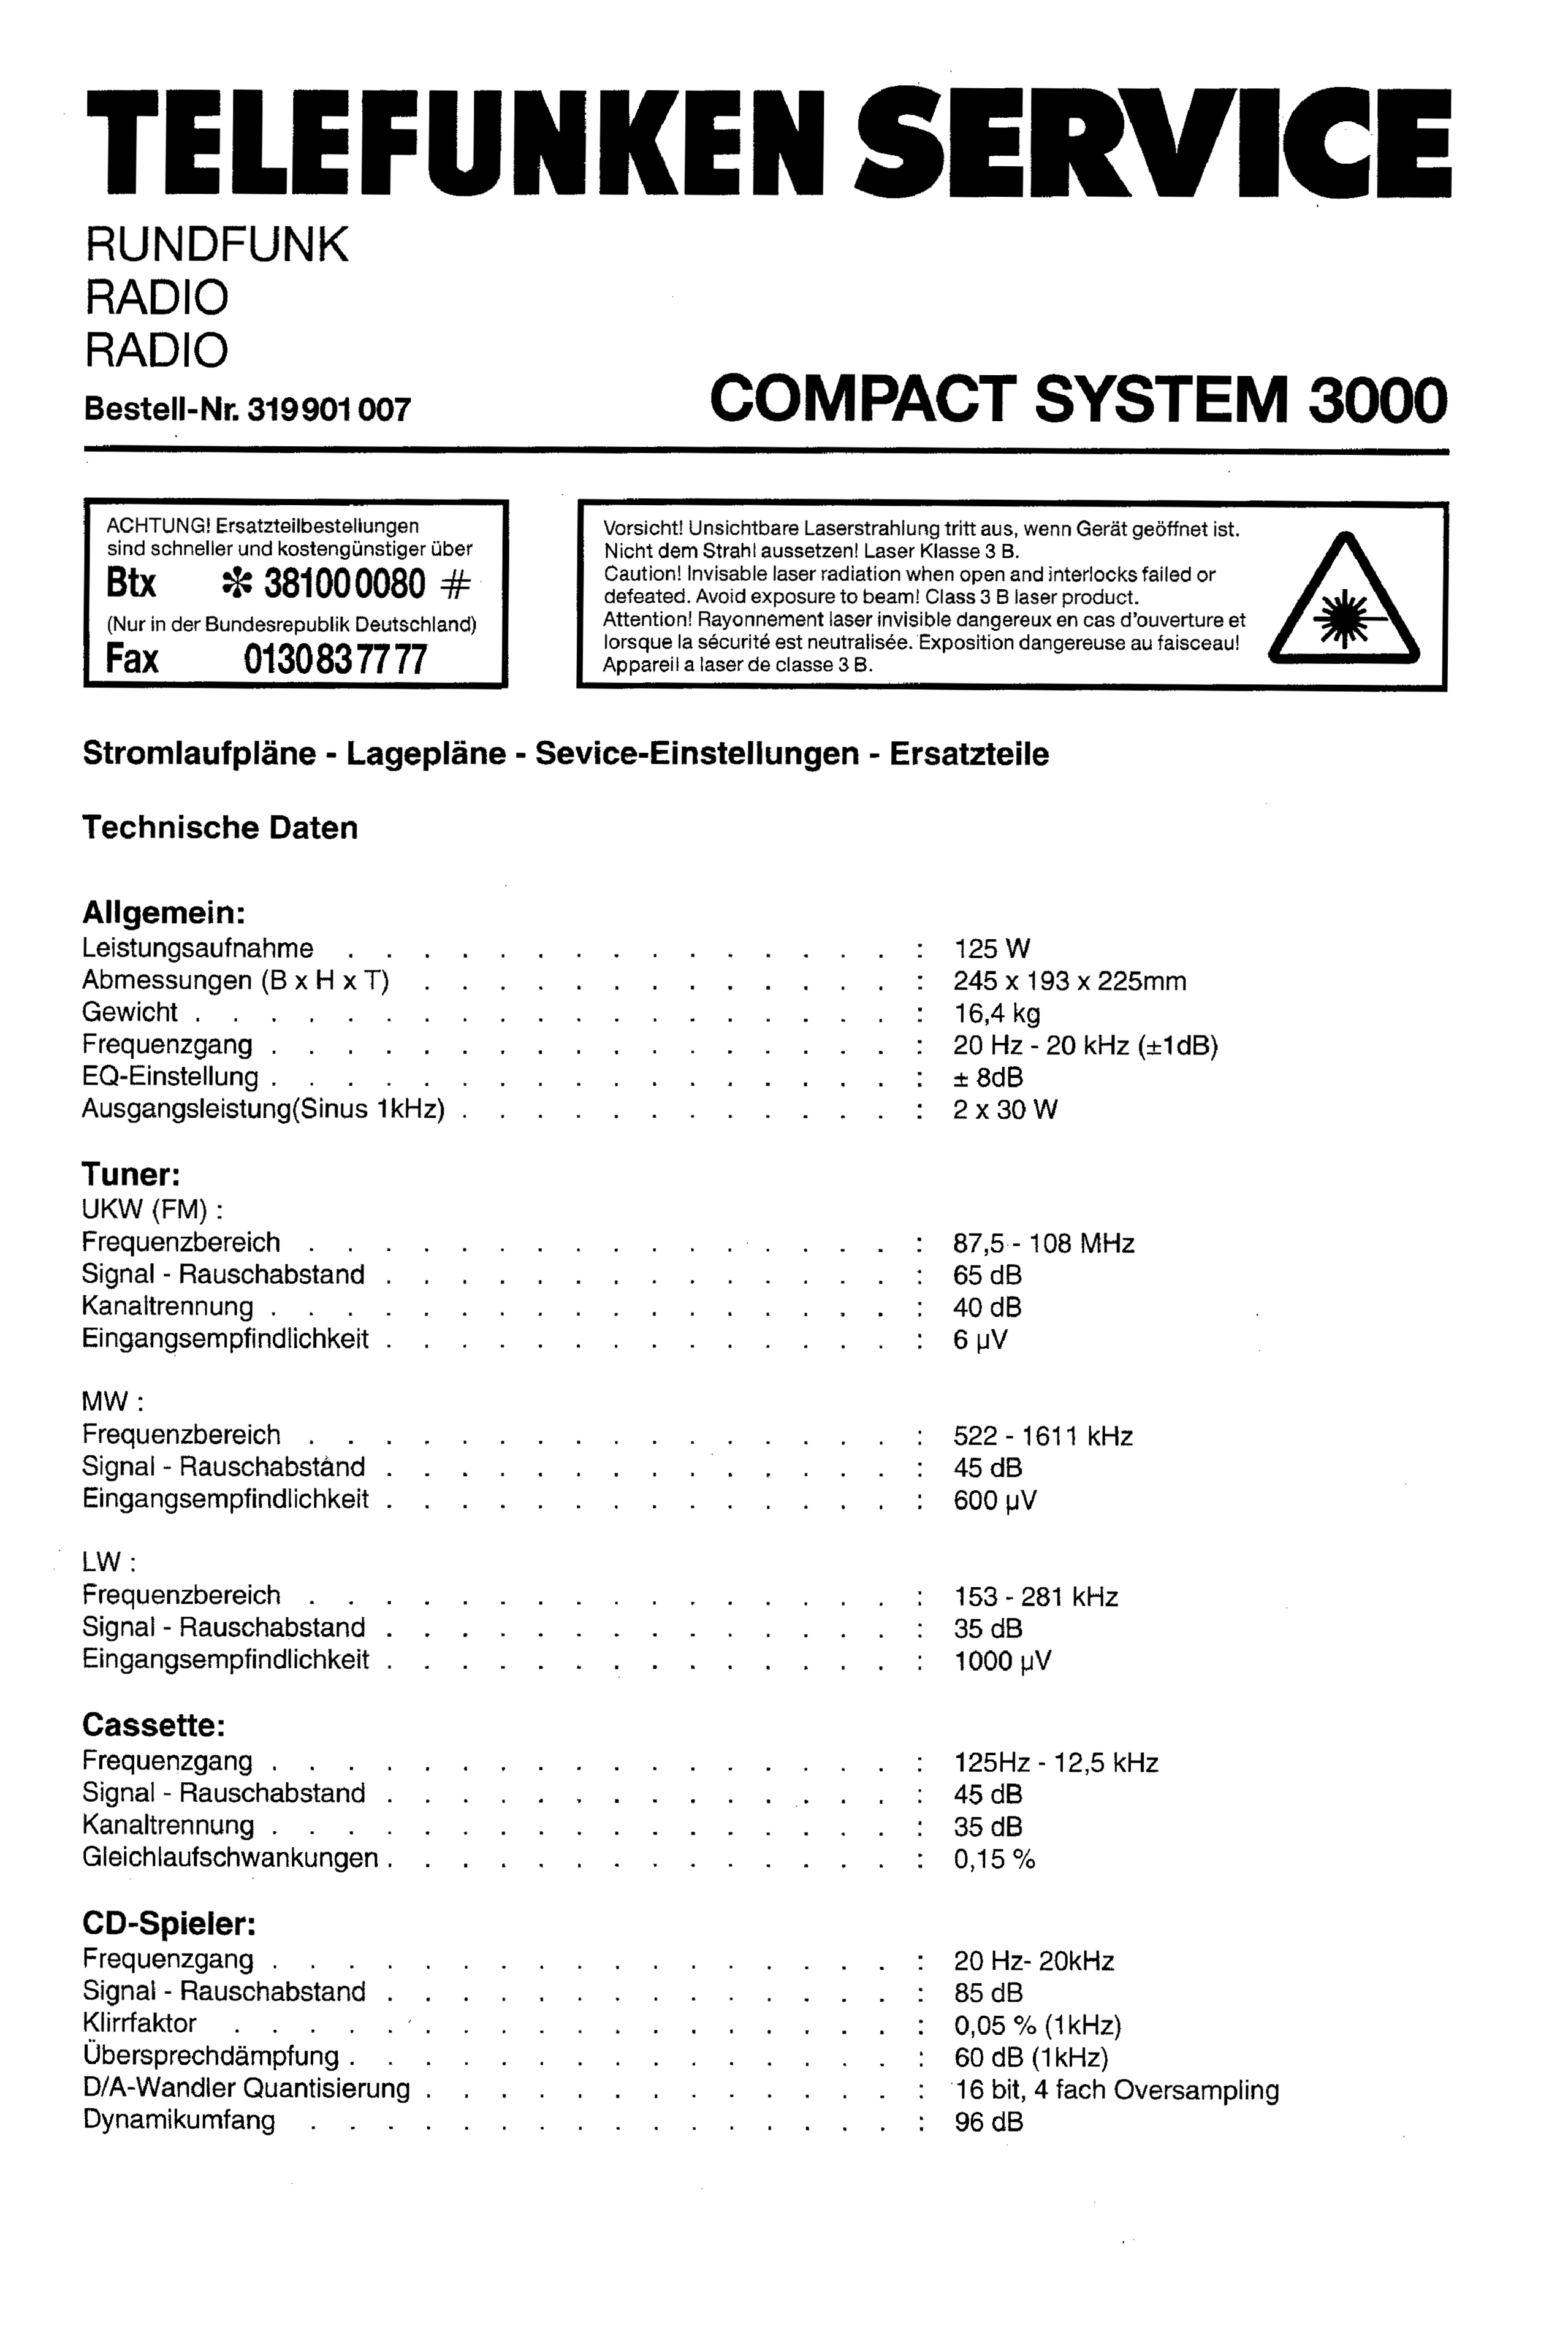 Telefunken Mini-Compact System 3000 CD-Daten-1991.jpg